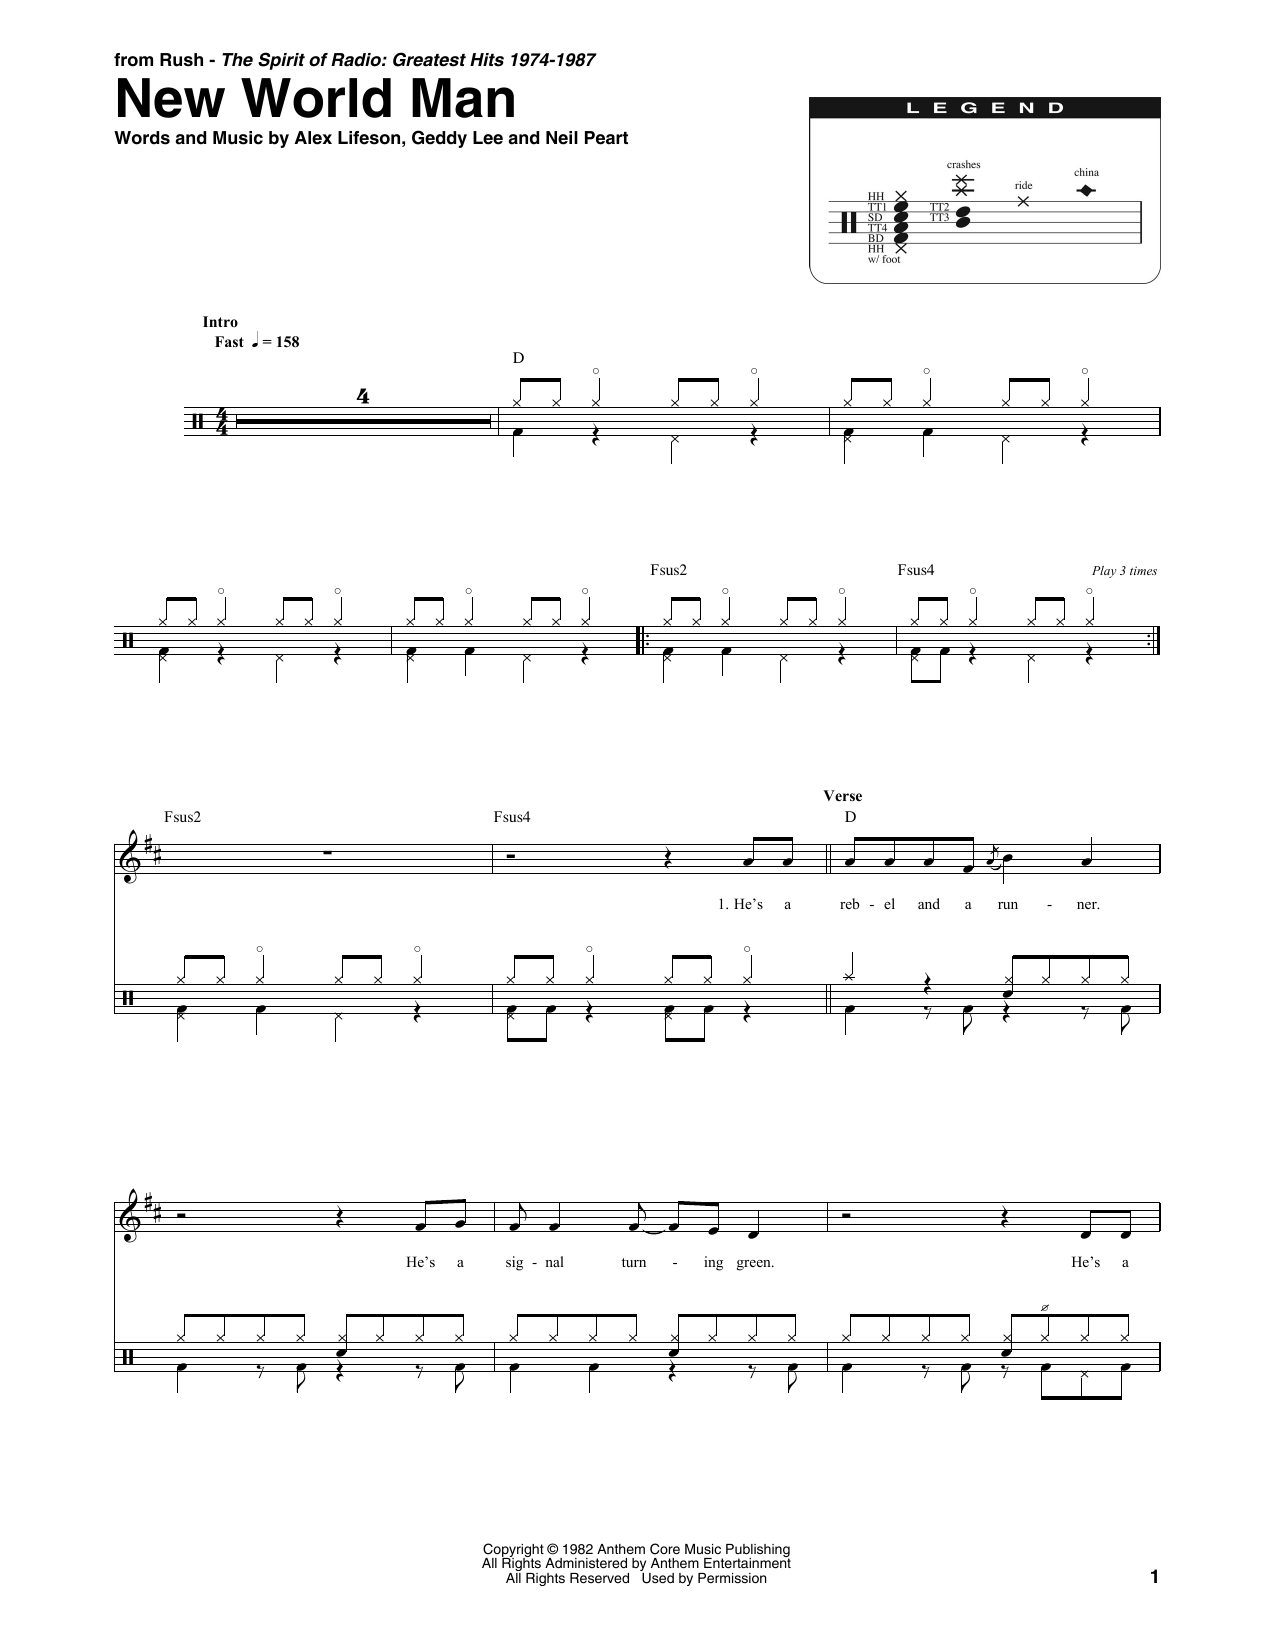 Rush New World Man Sheet Music Notes & Chords for Bass Guitar Tab - Download or Print PDF